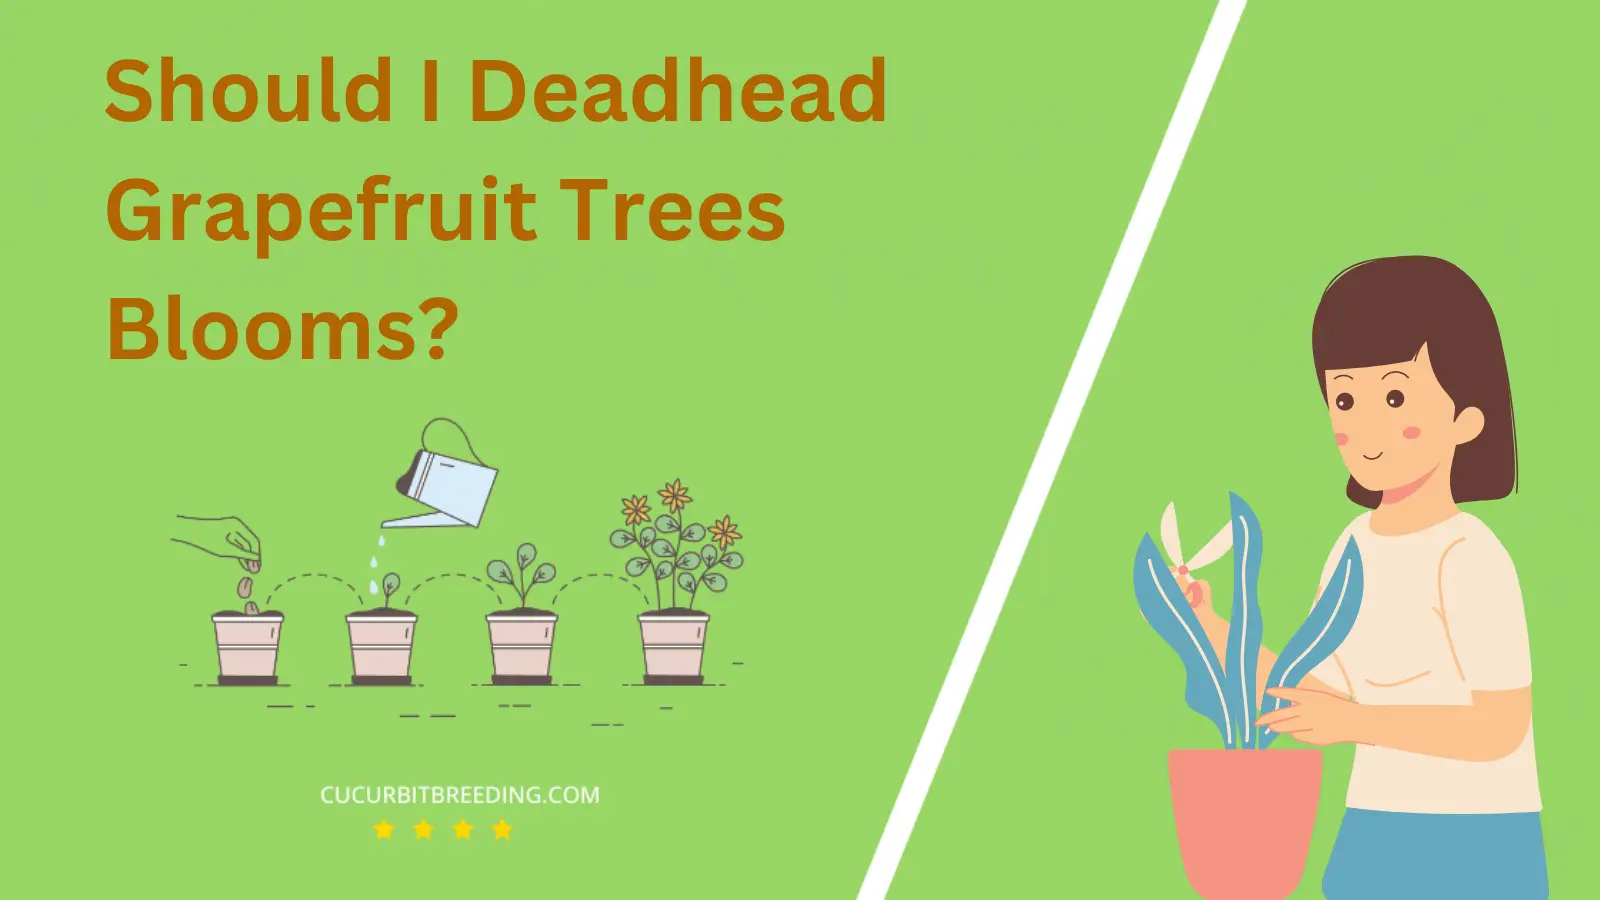 Should I Deadhead Grapefruit Trees Blooms?